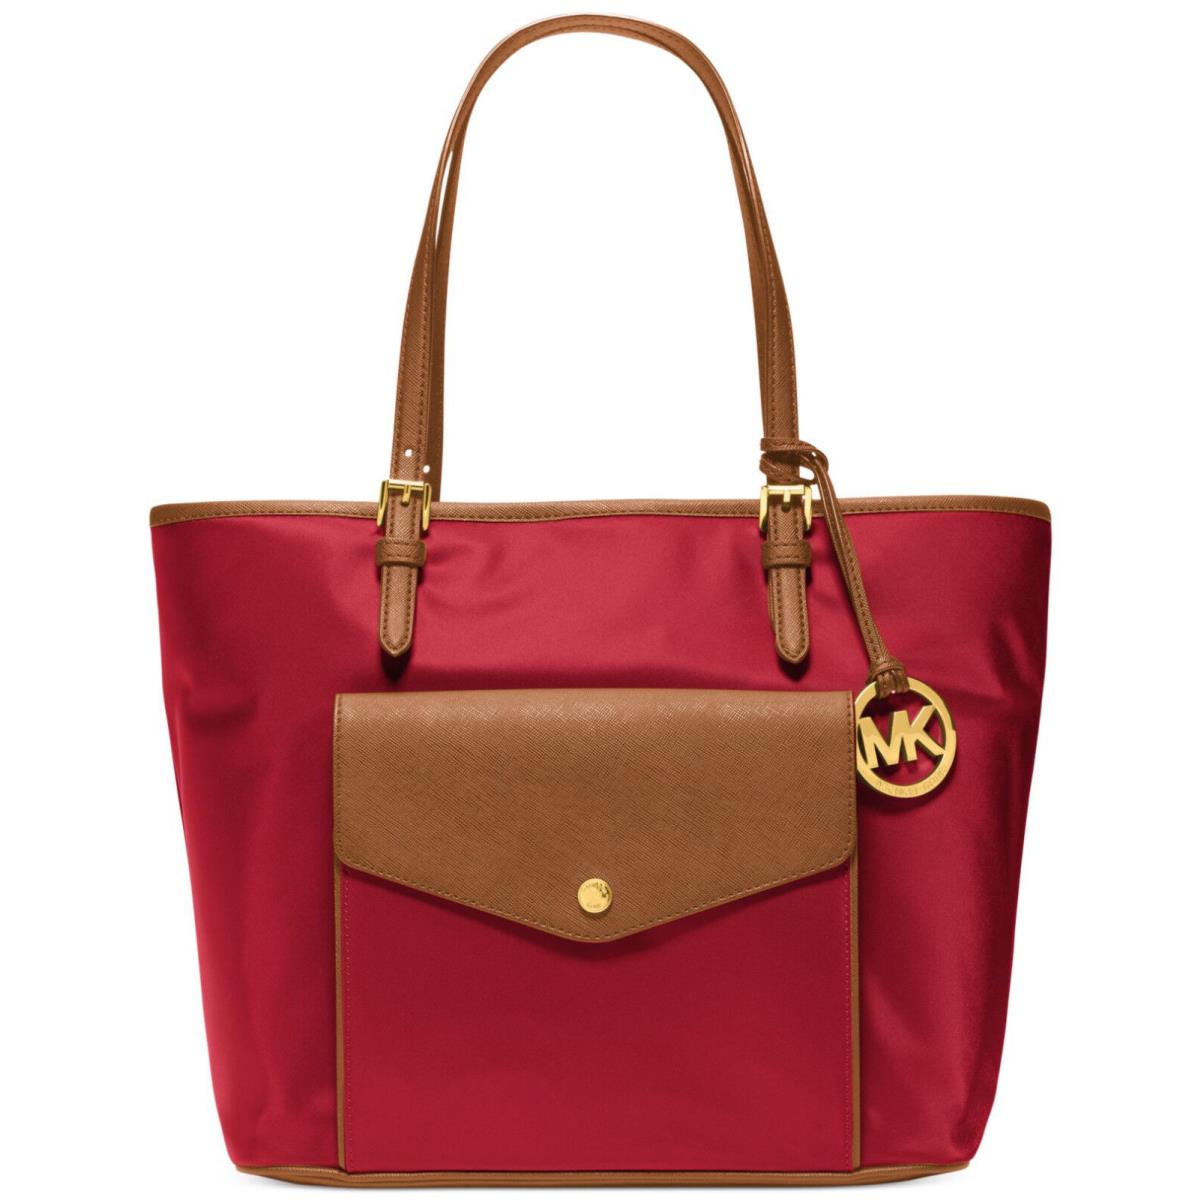 🔥MICHAEL KORS OUTLET Women's Handbag Brown SALE 80% OFF - YouTube